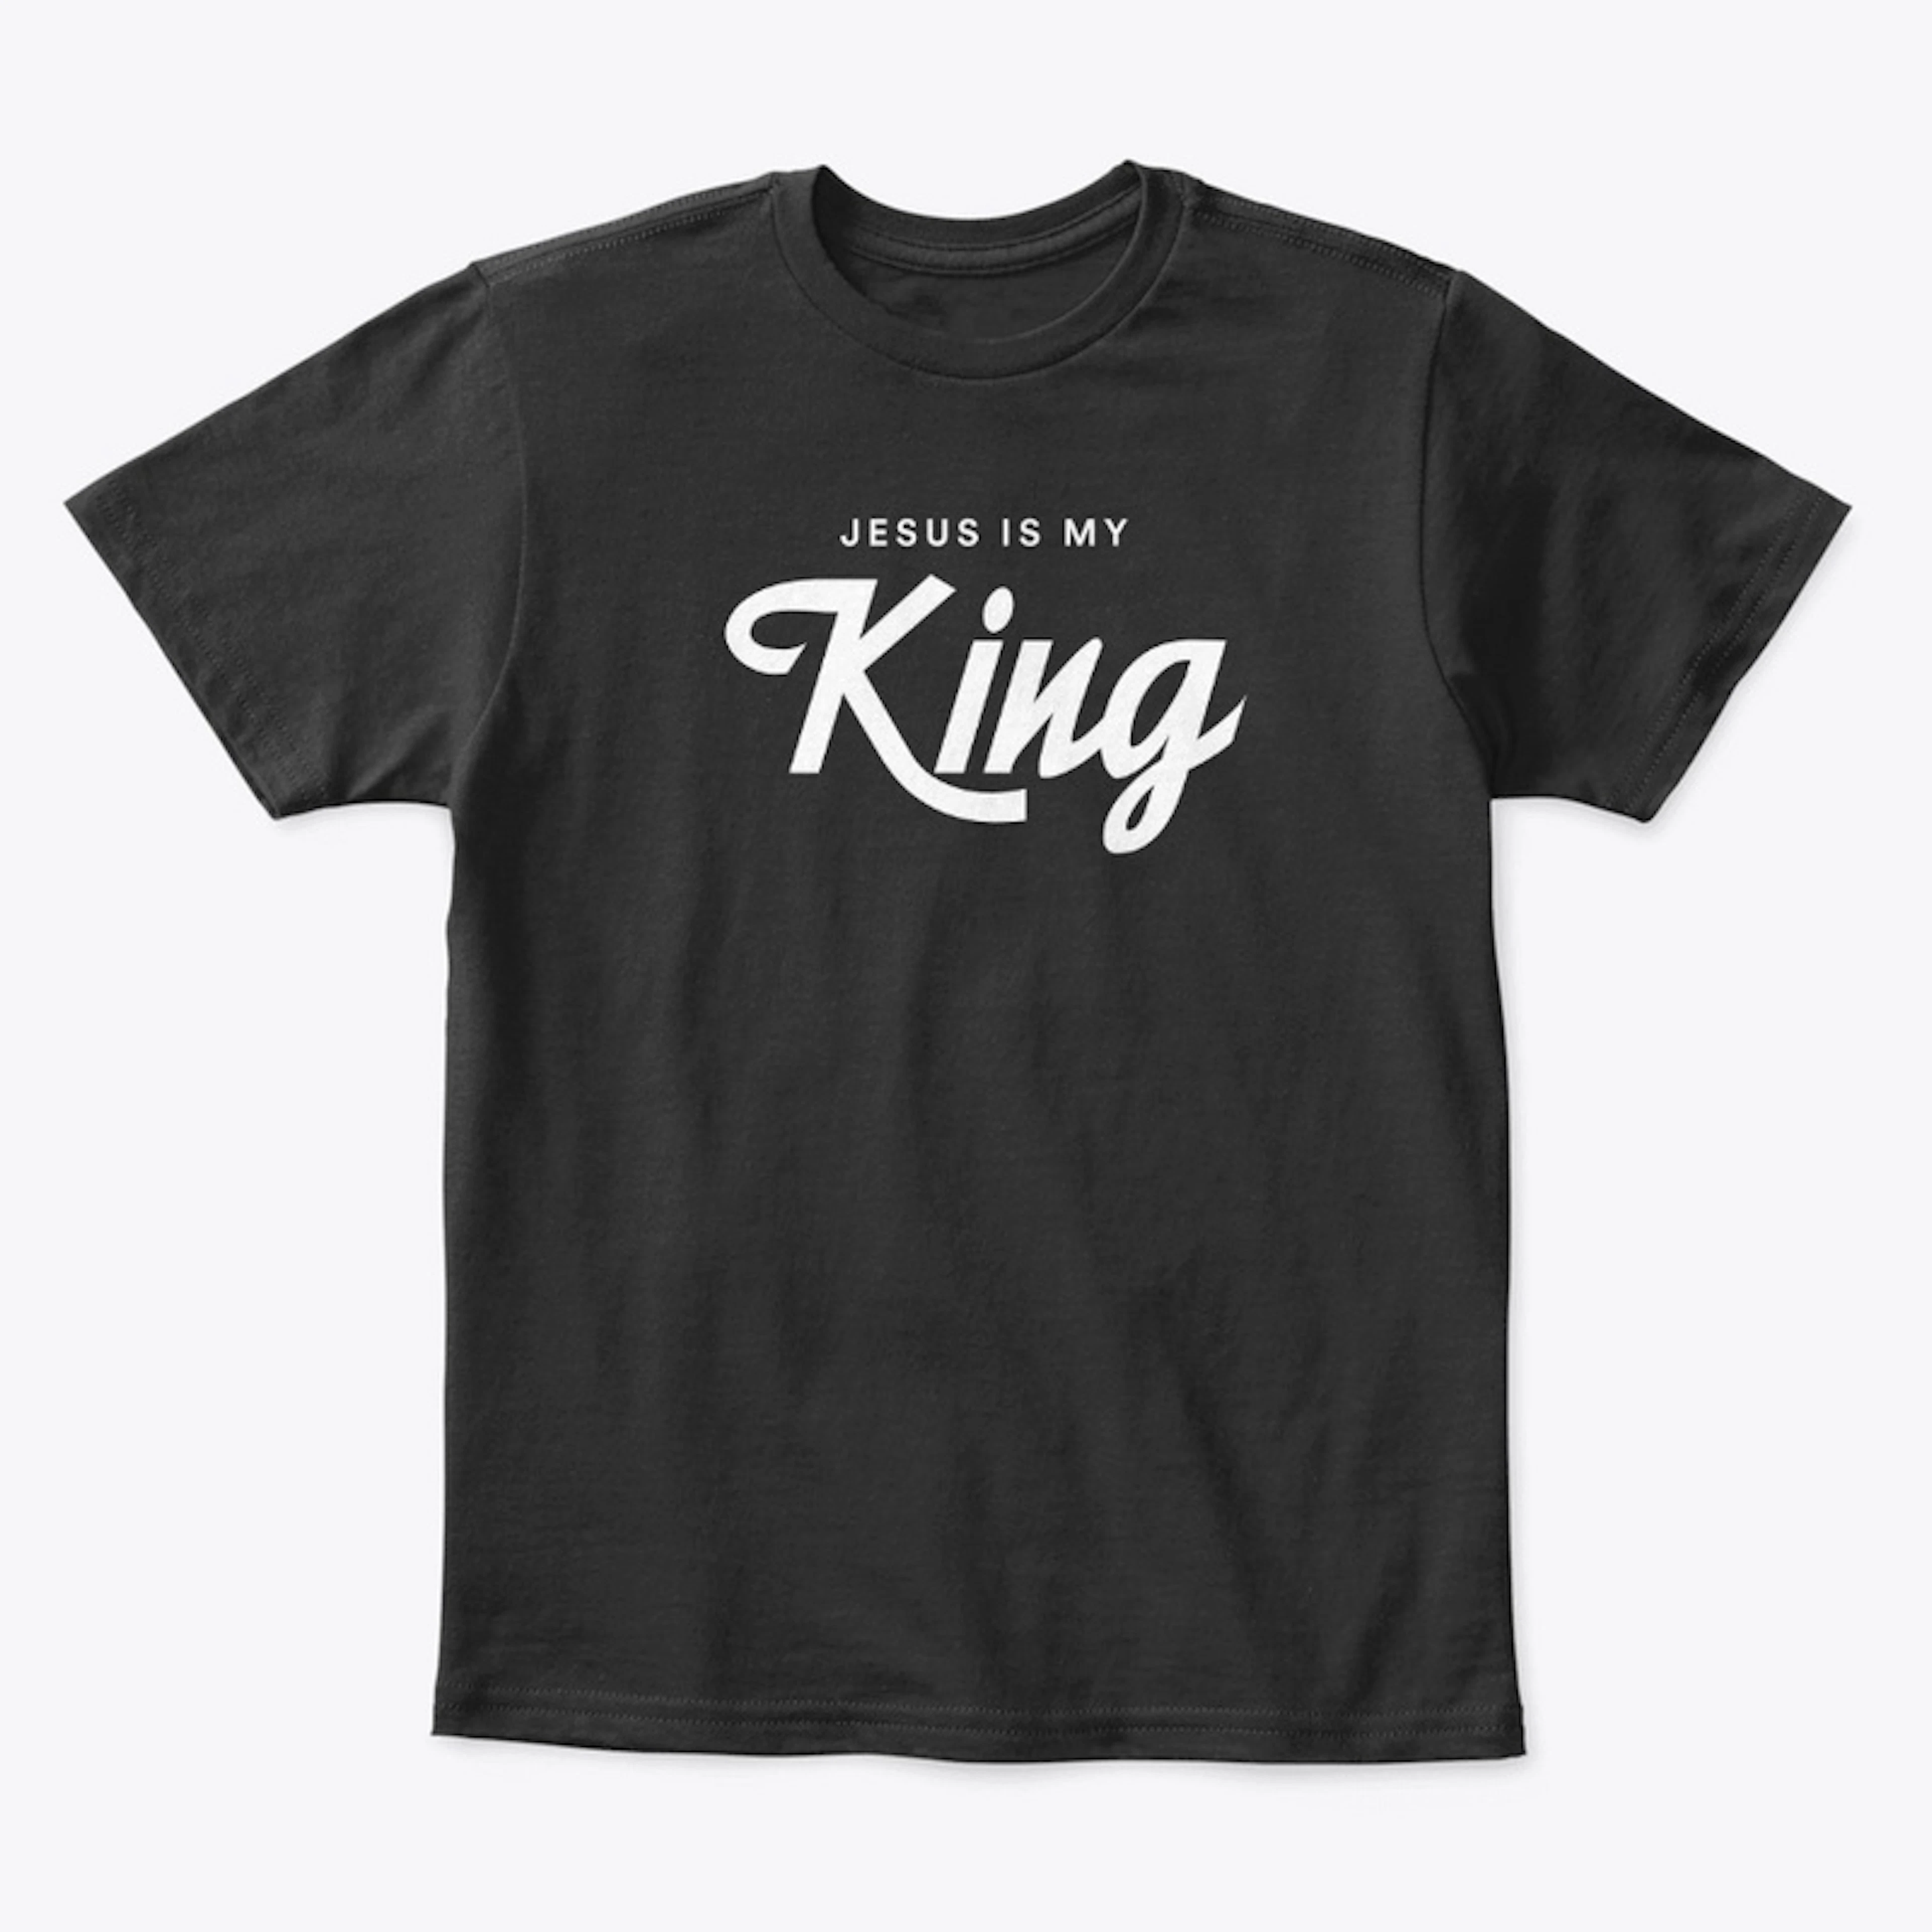 Jesus Is My King Tee | Black and more